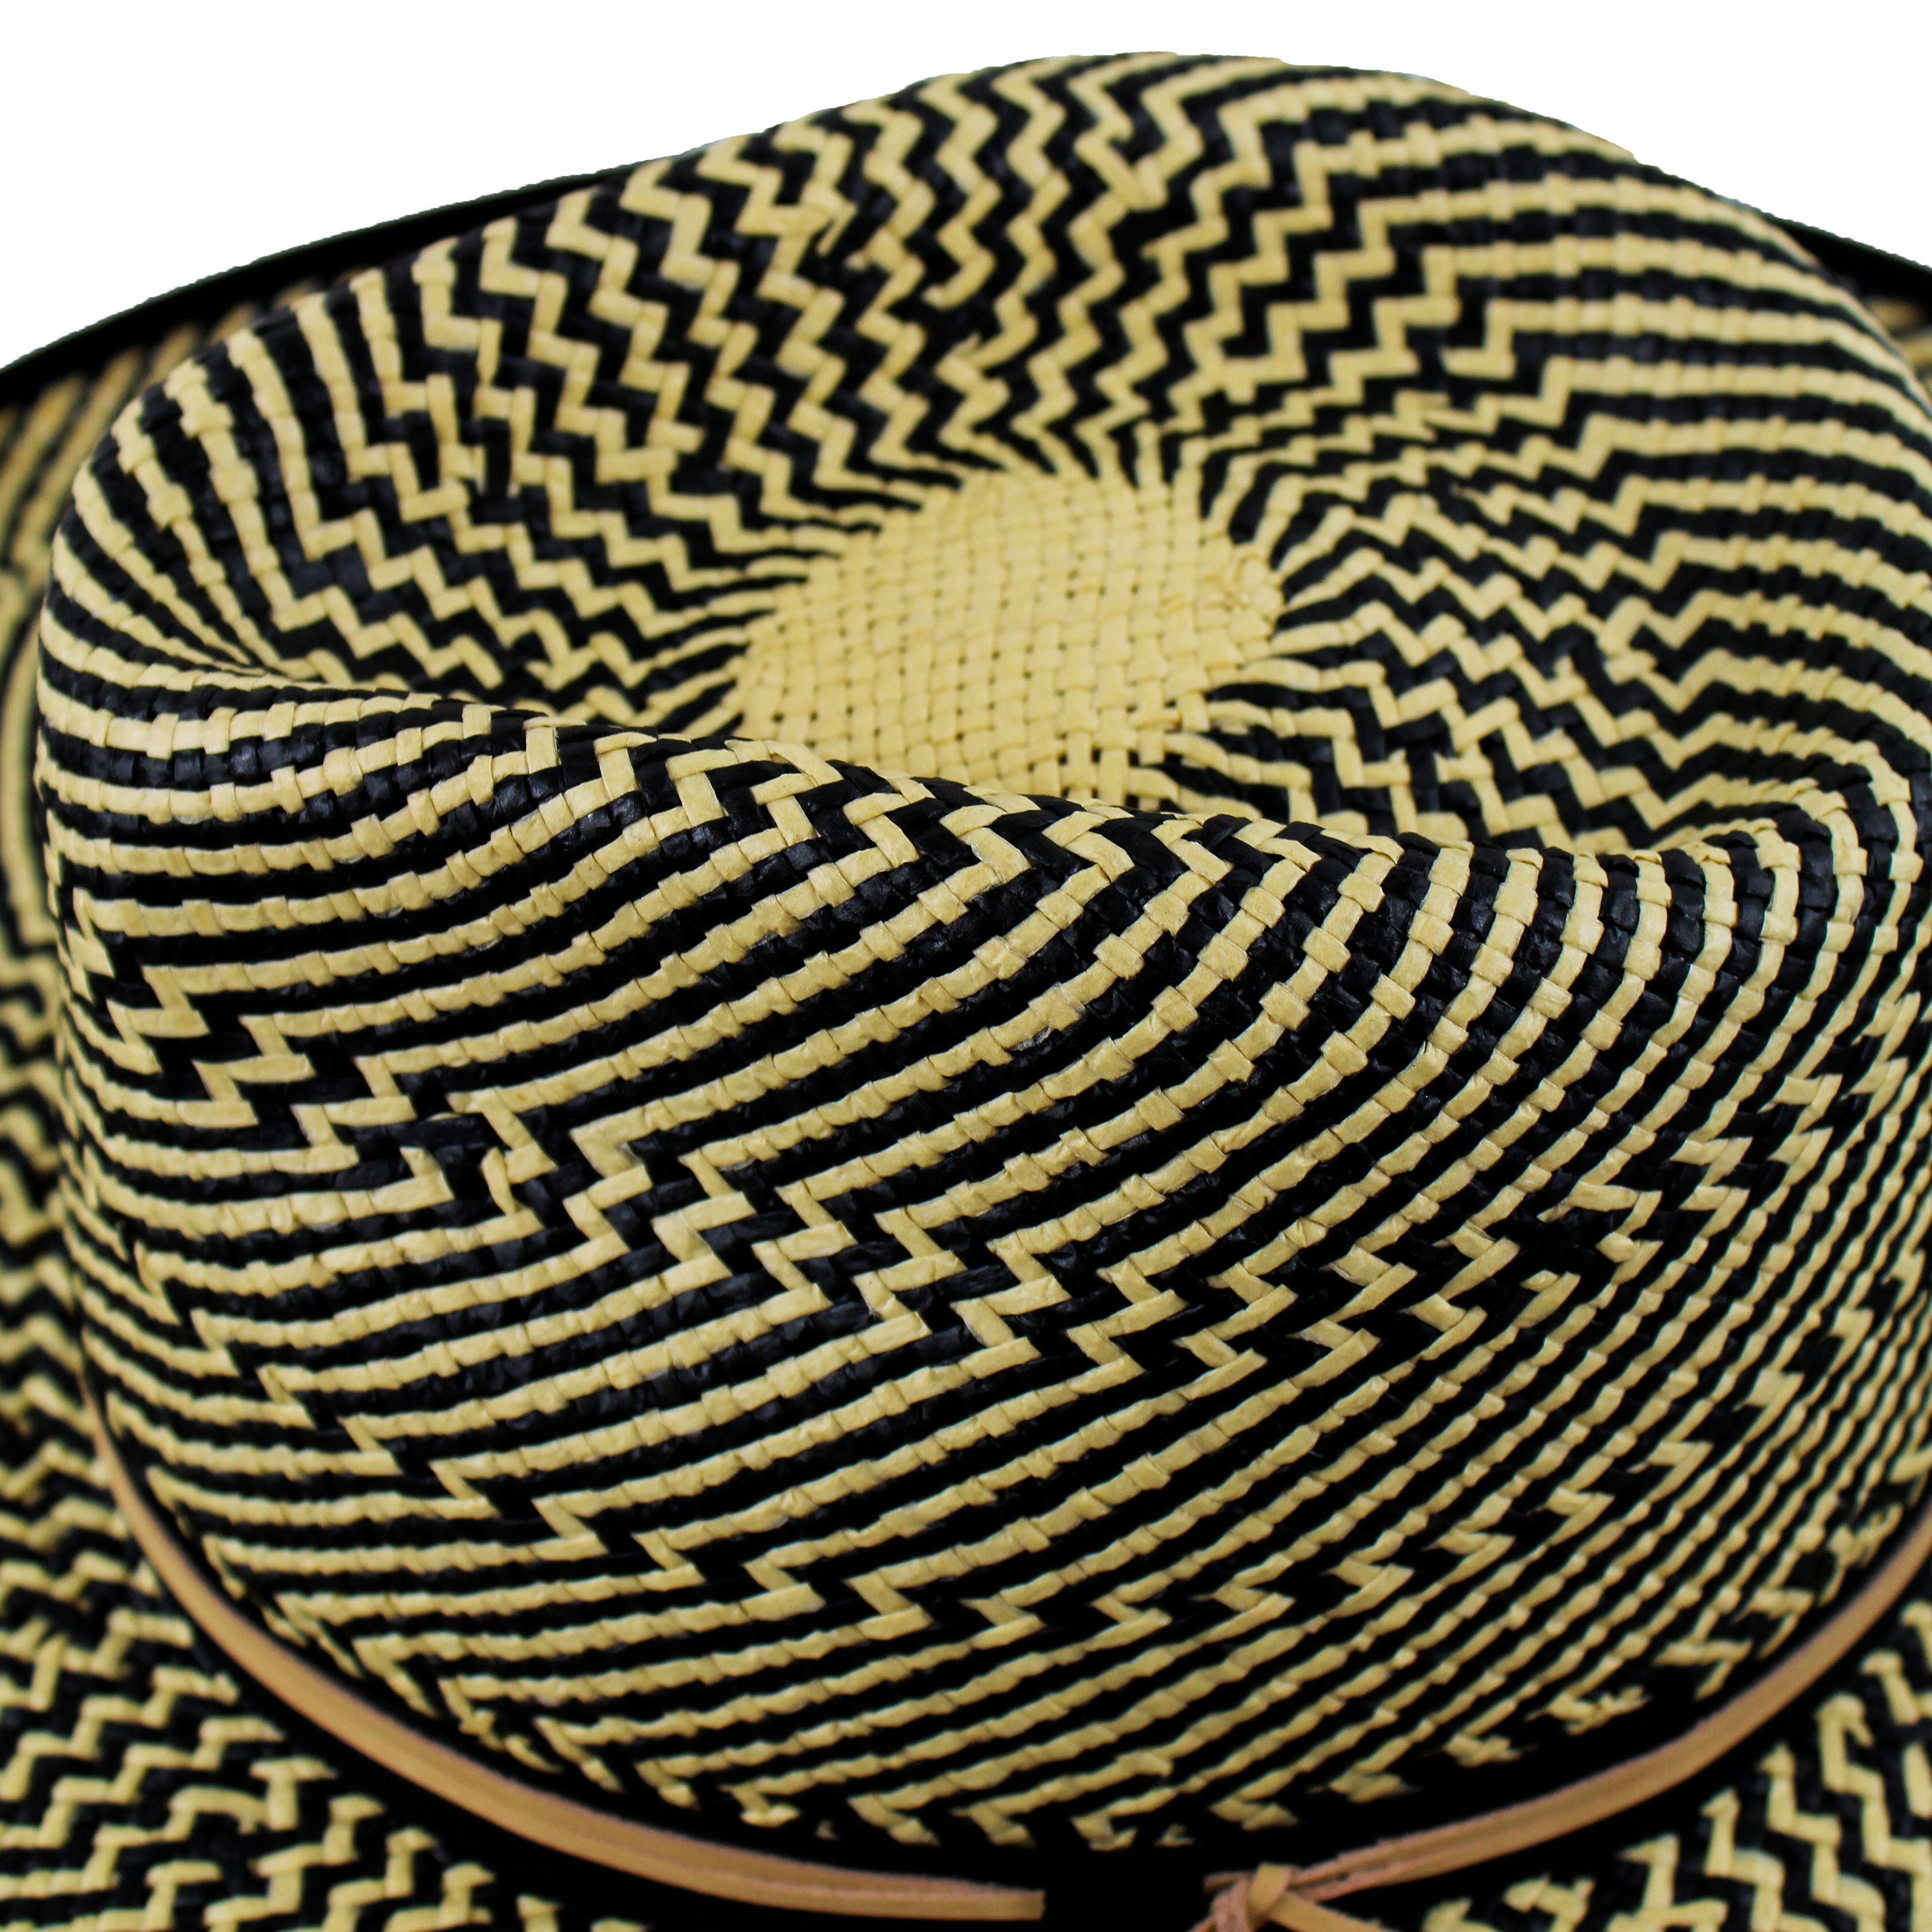 Galilee Rancher Straw Hat in Black/Tan